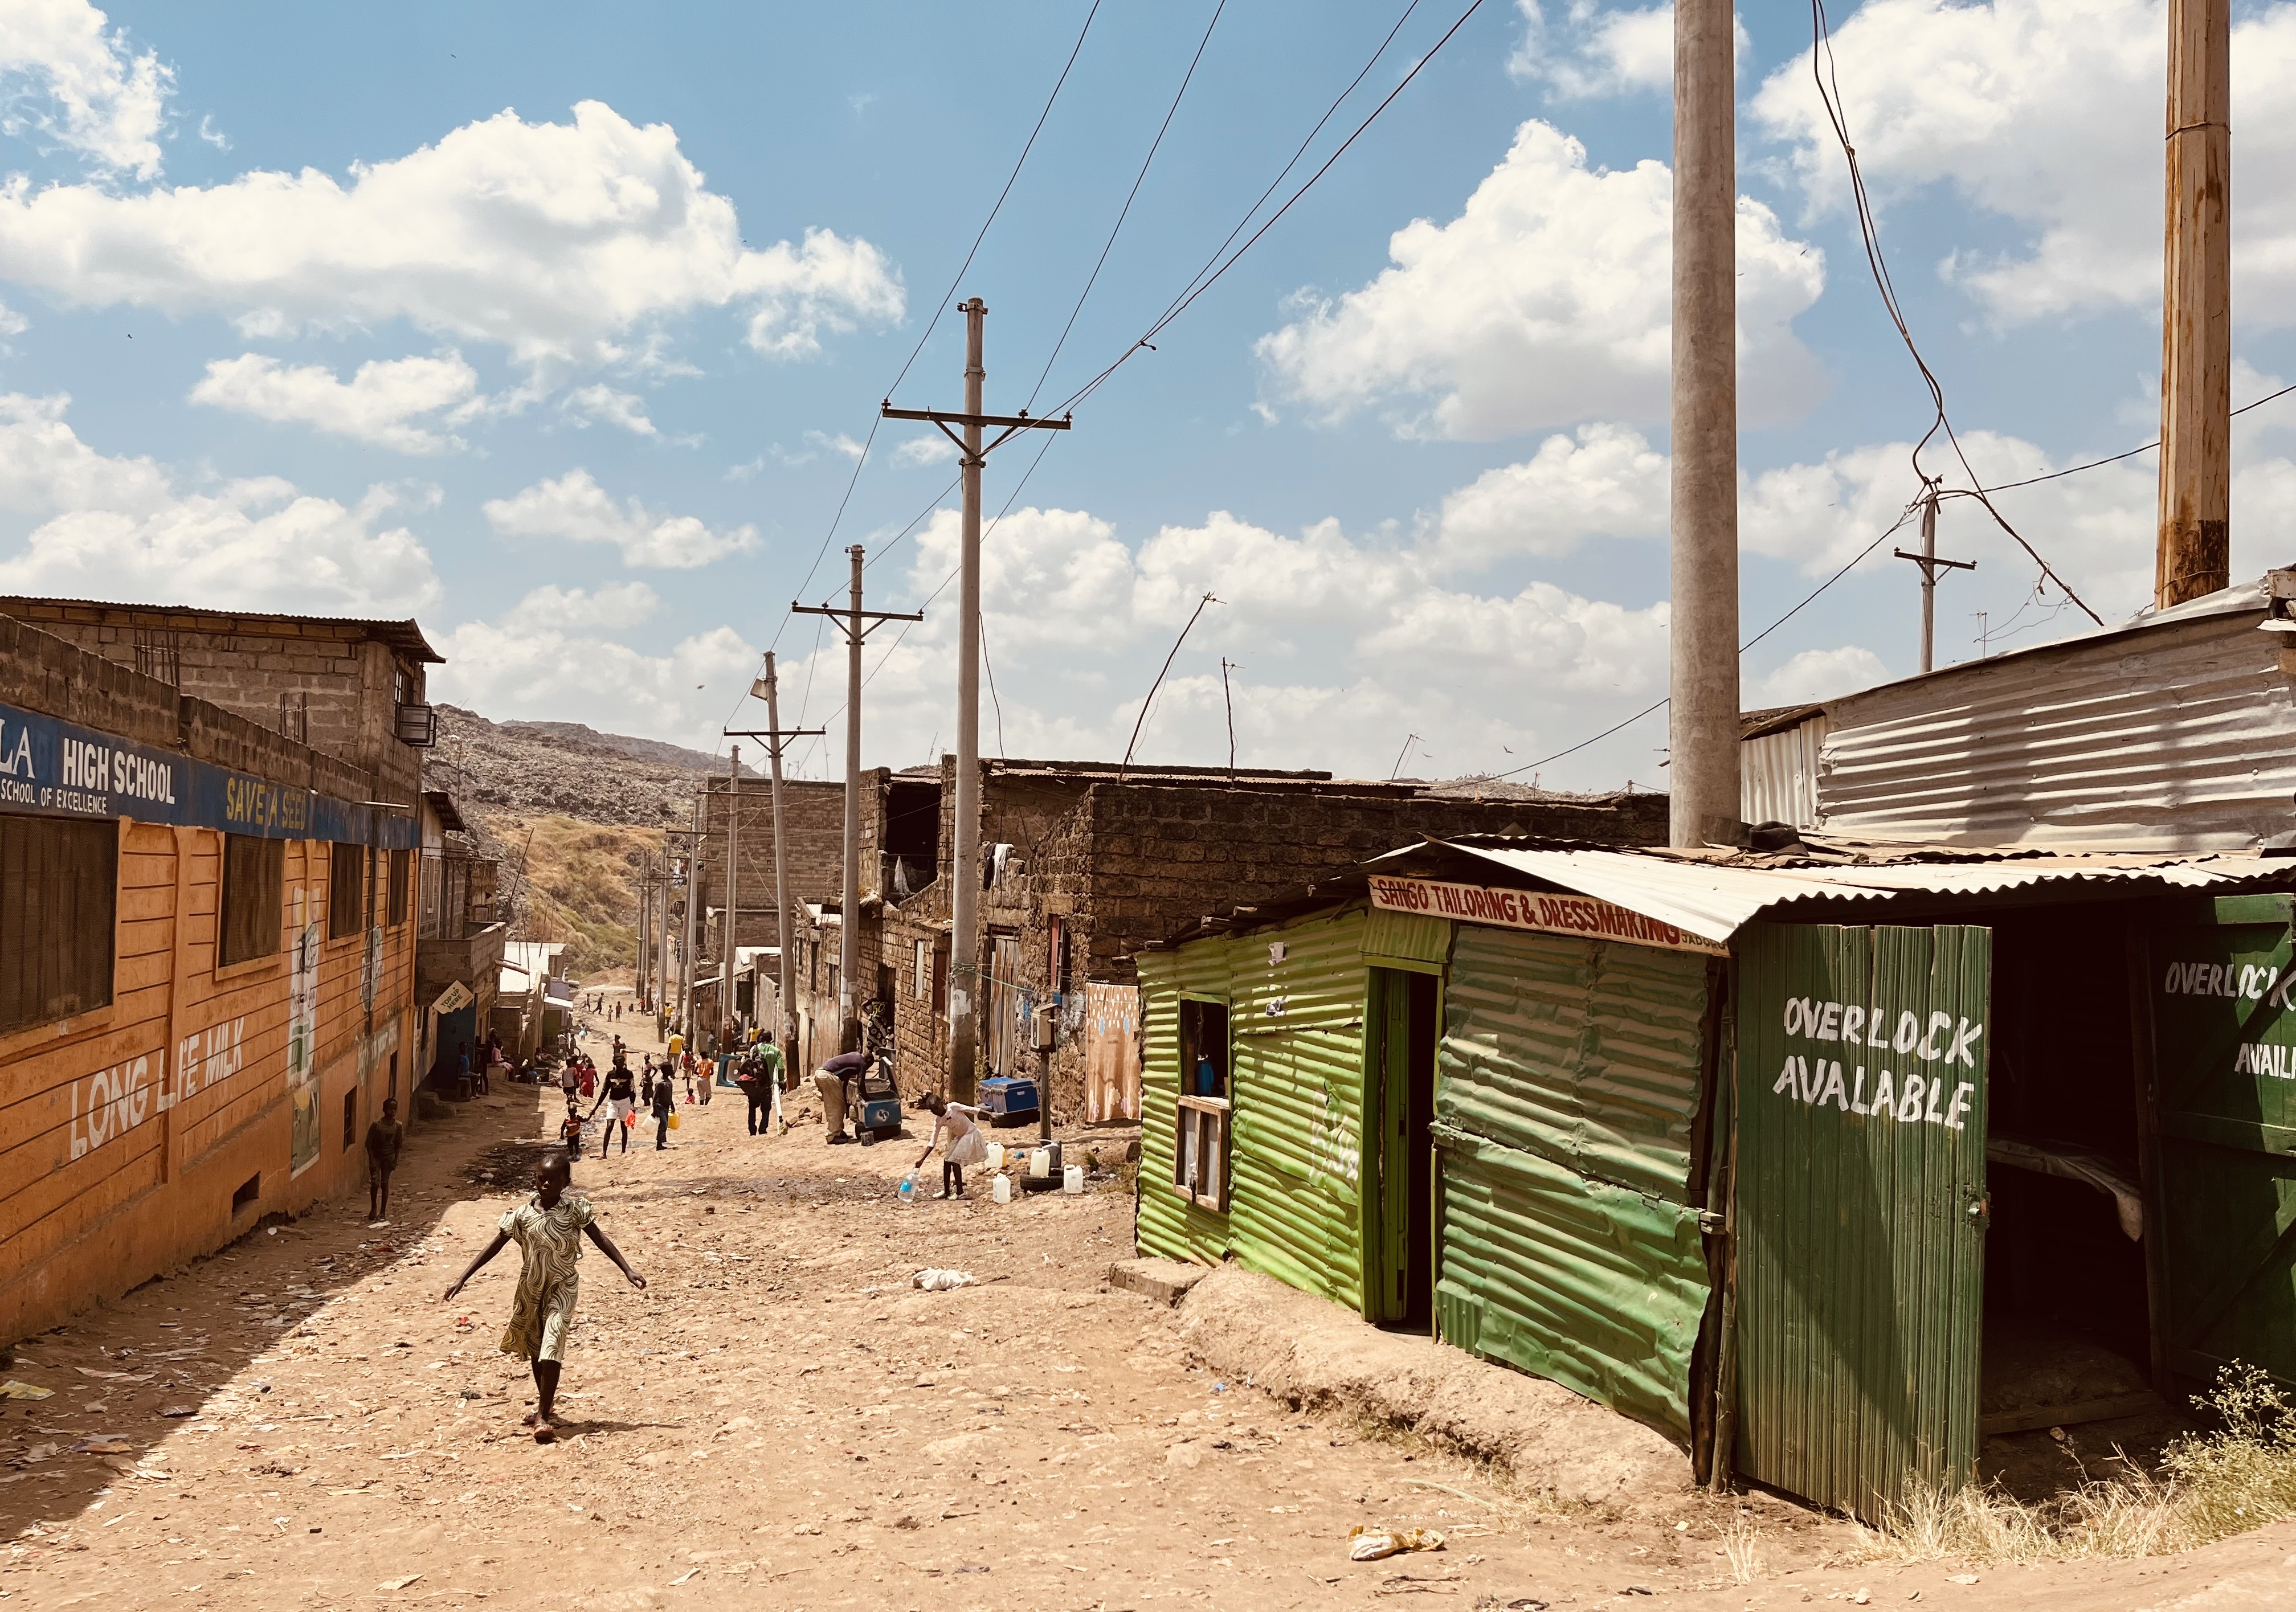 Art and hope spring from the slums of Nairobi, Kenya